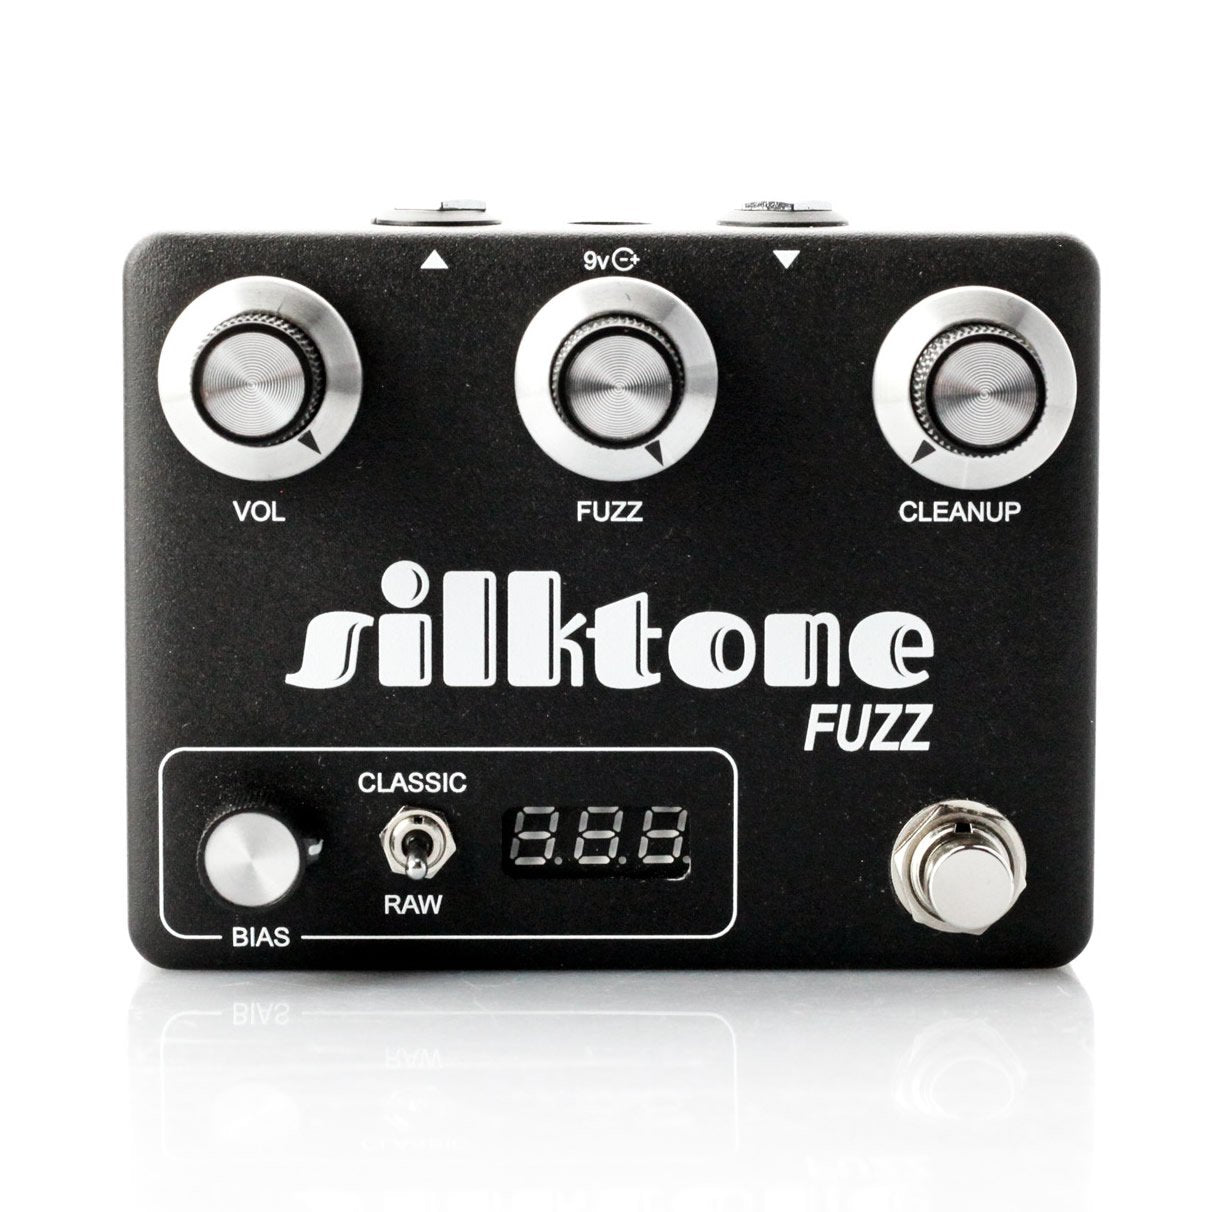 Silktone Fuzz - Black